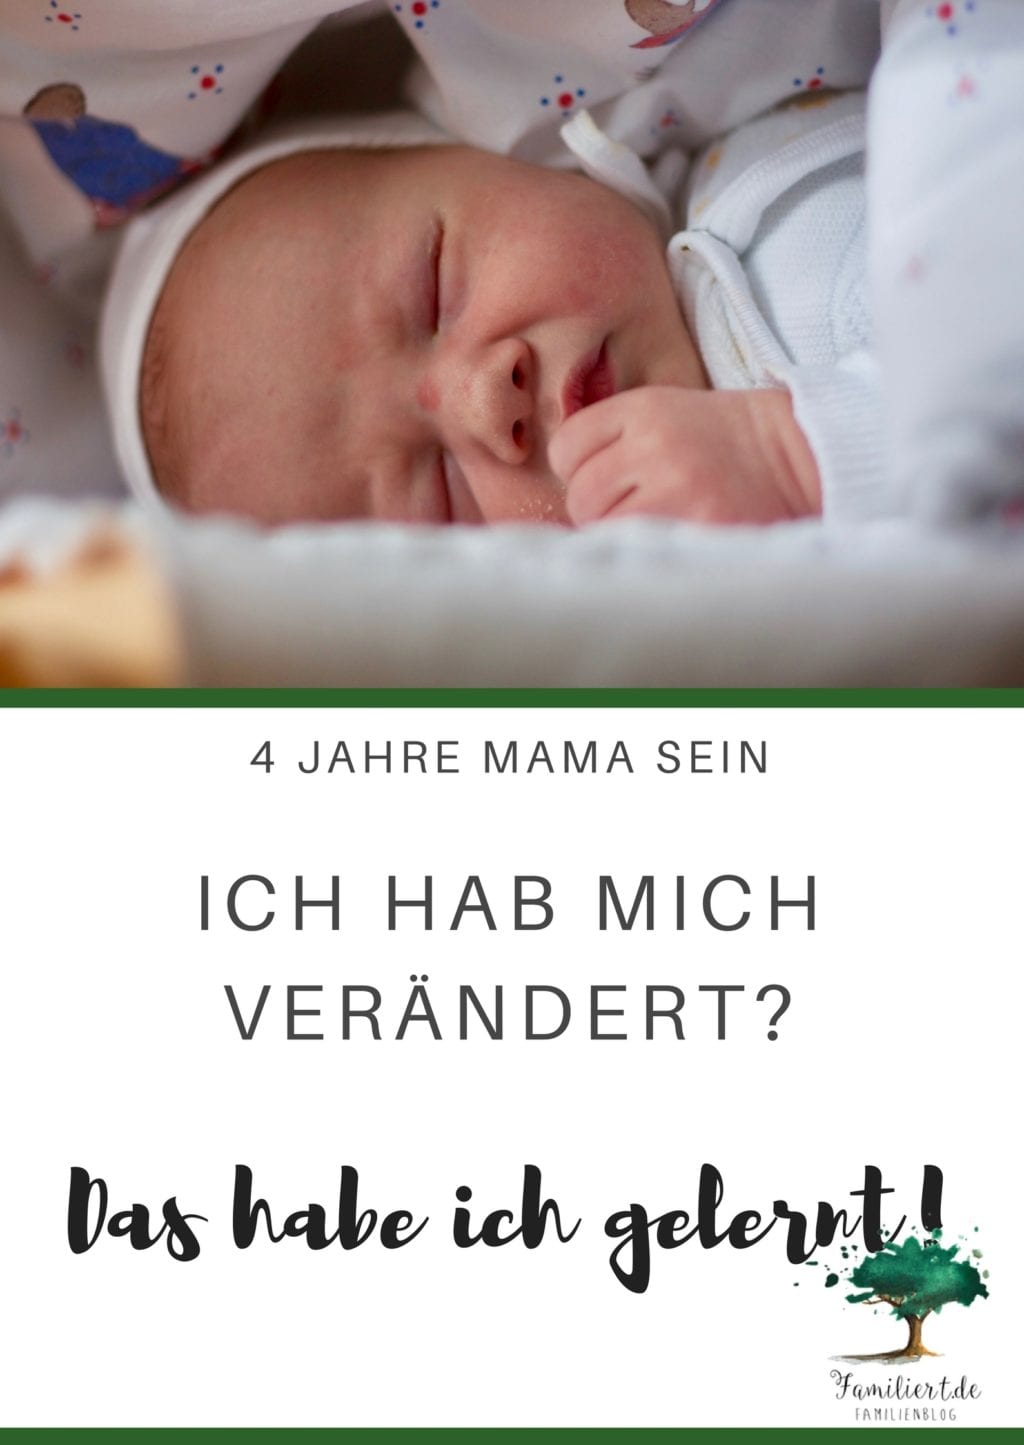 Mama sein veraenderung | familiert.de